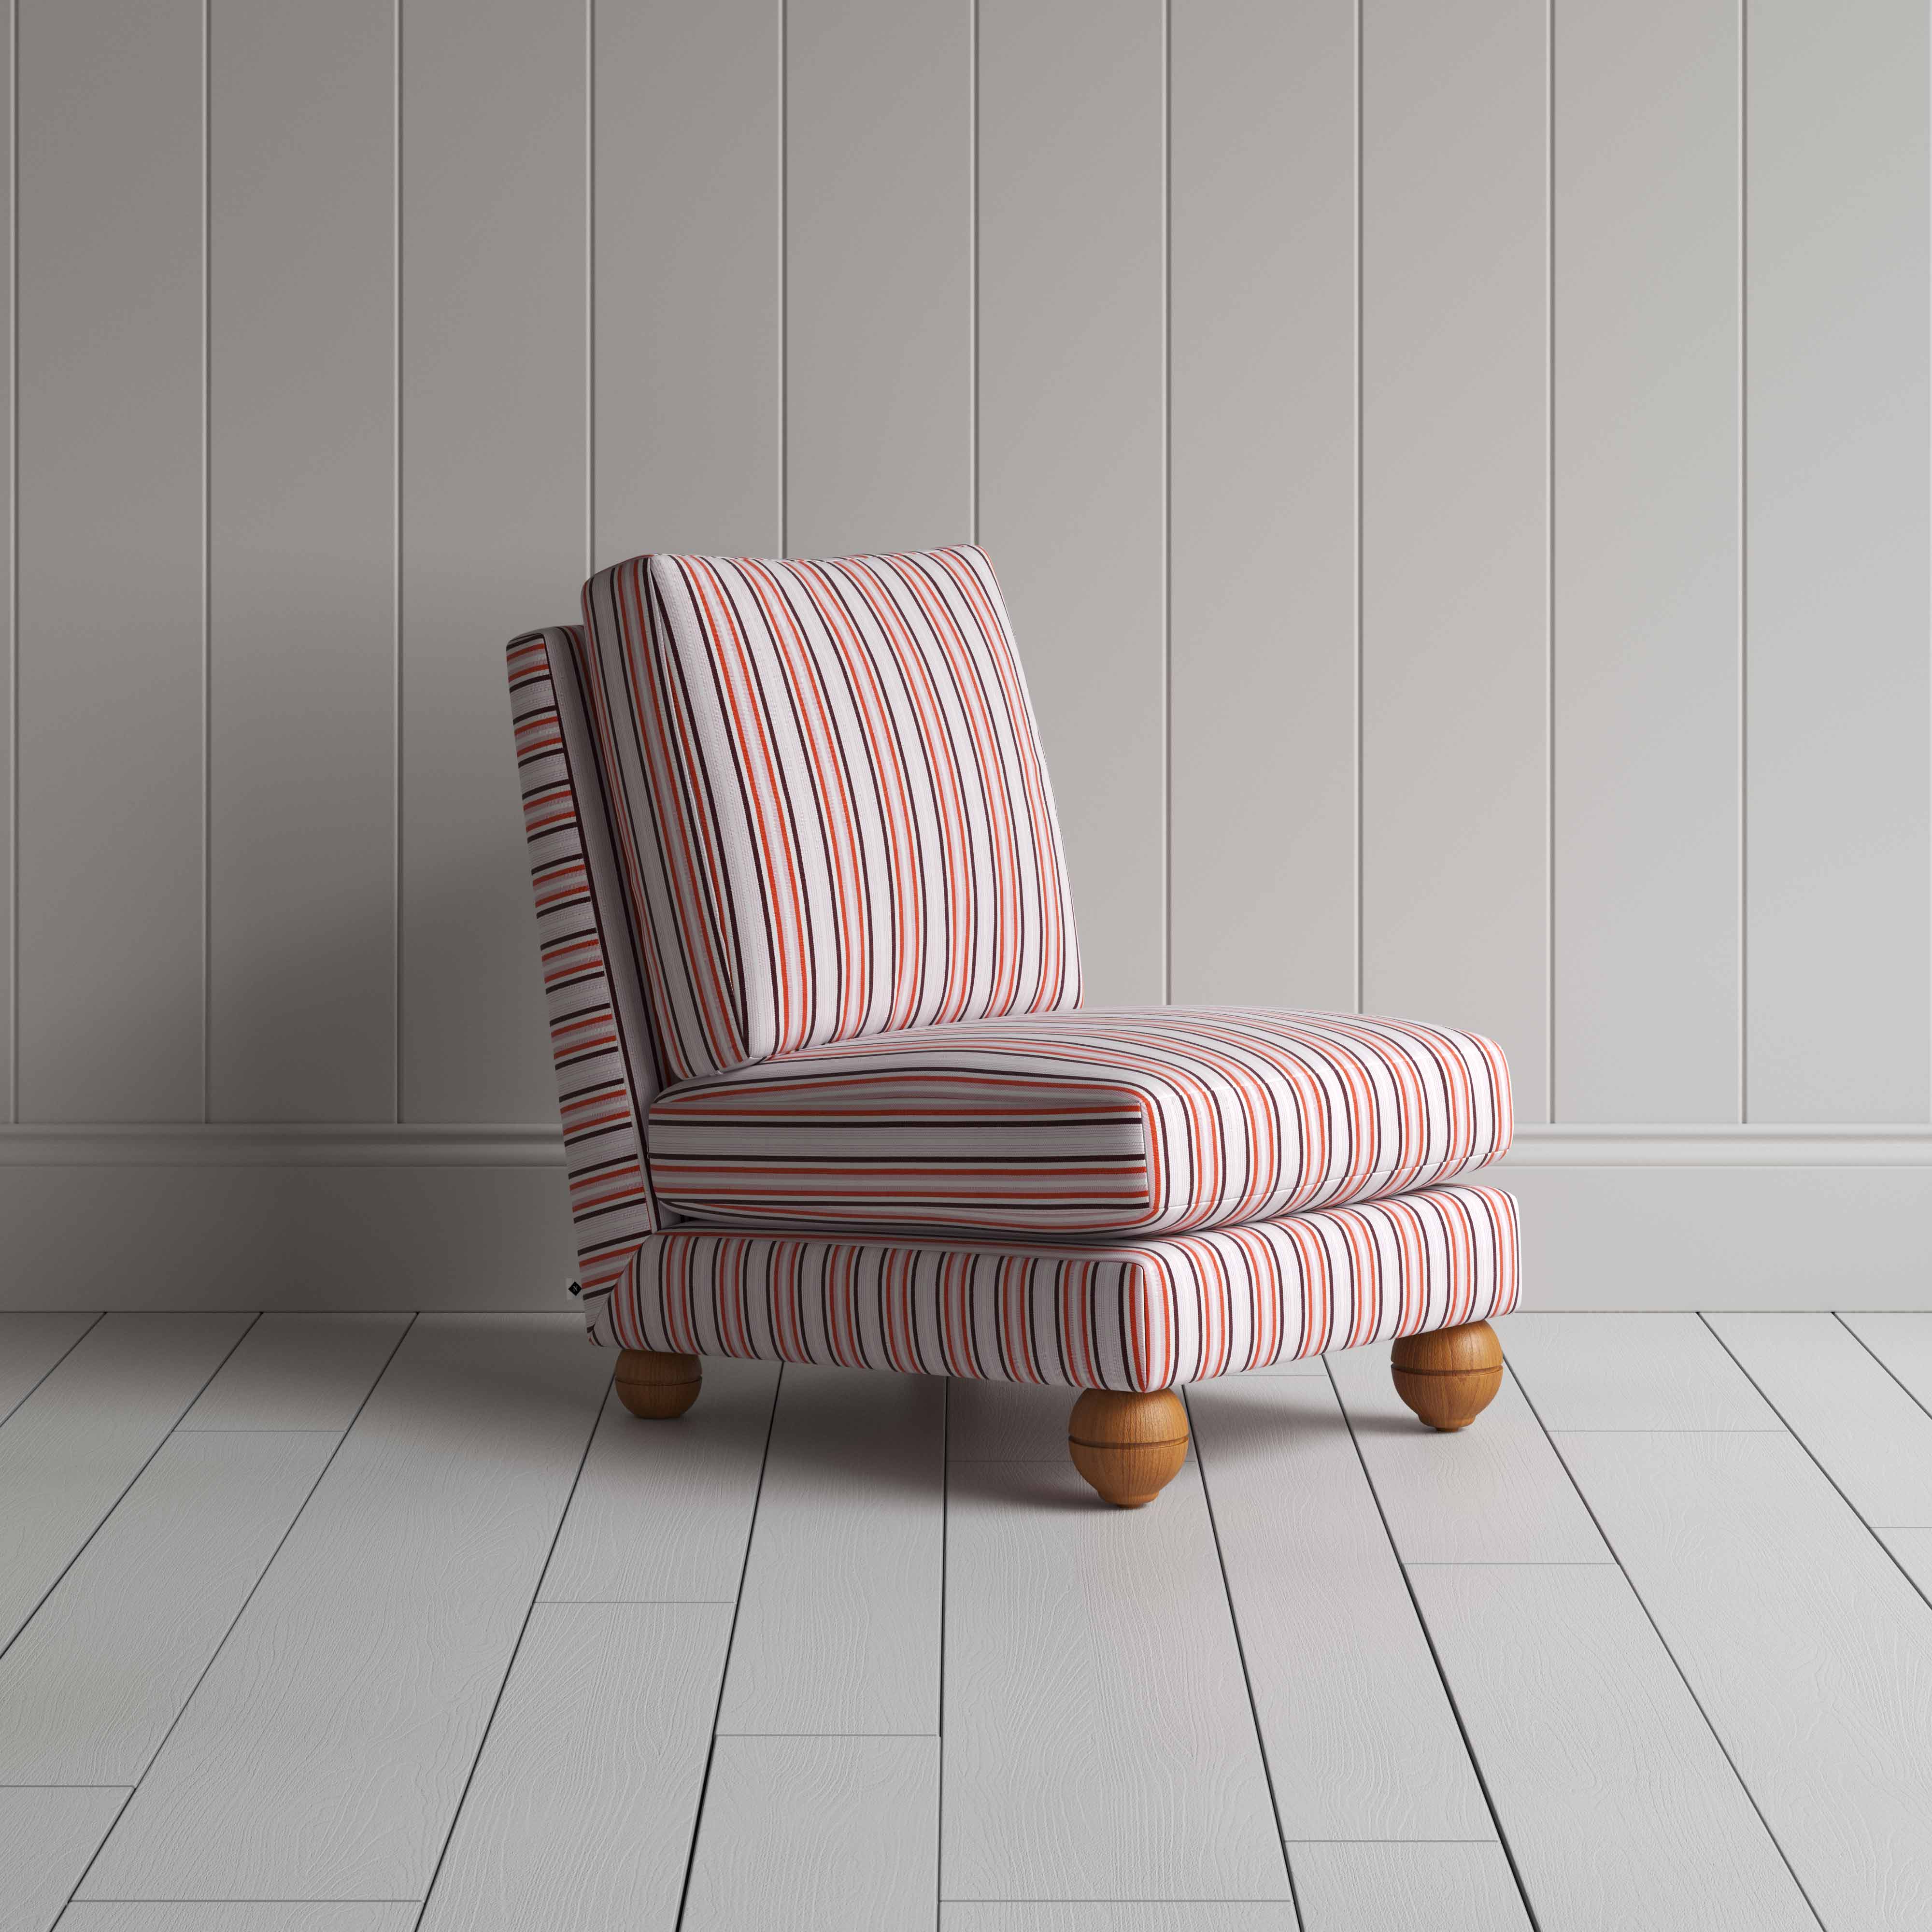  Perch Slipper Armchair in Slow Lane Cotton Linen, Berry 